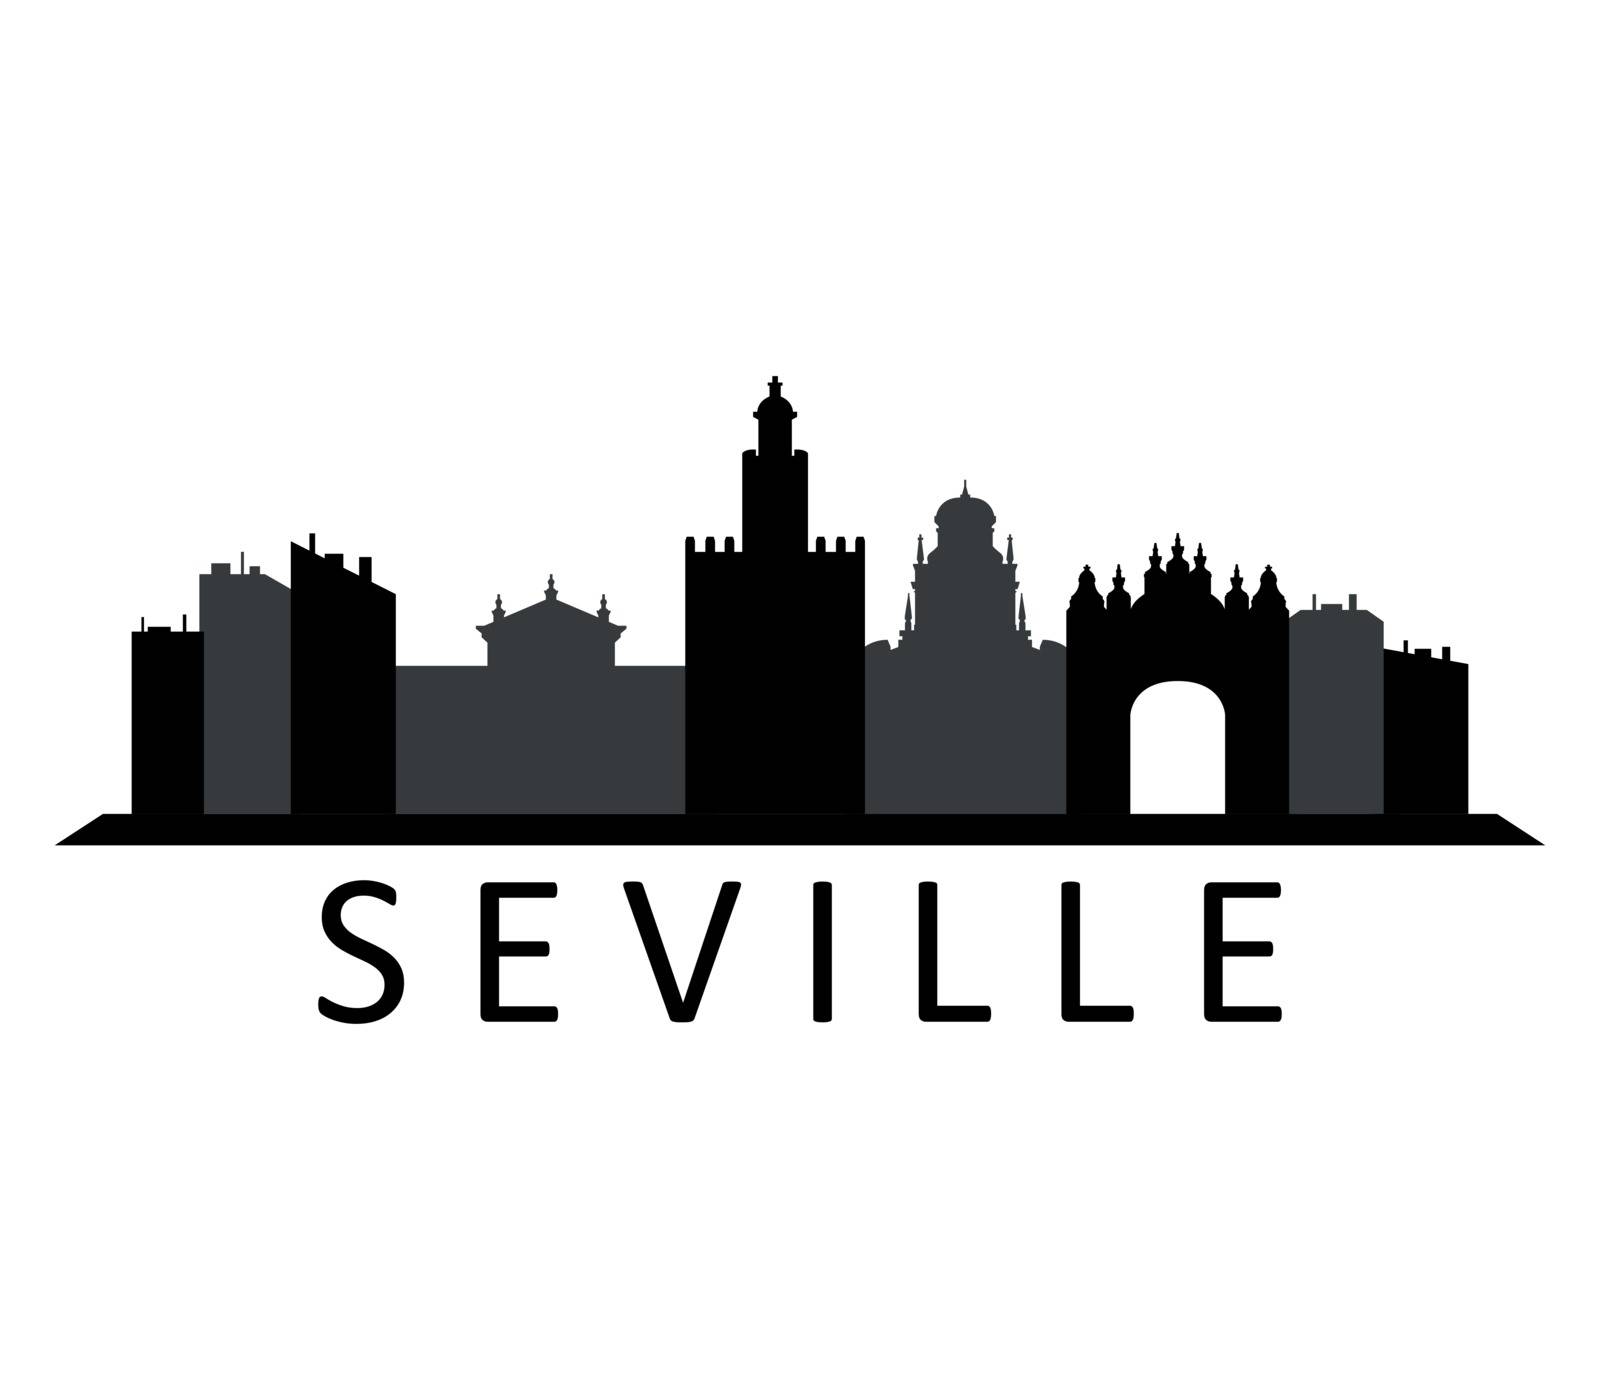 seville skyline